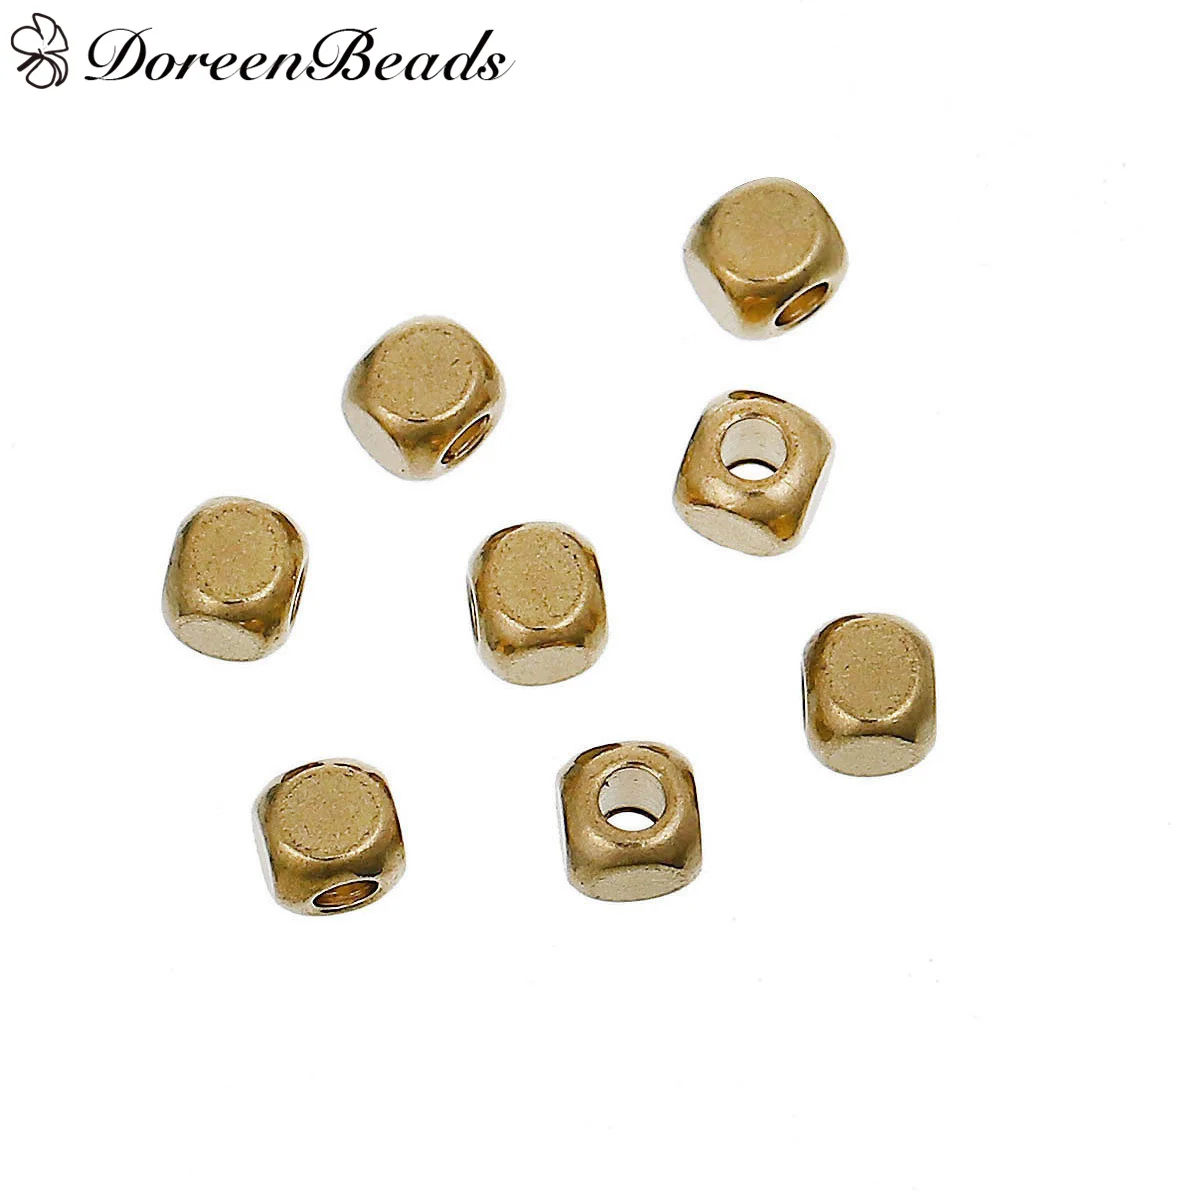 Фото DoreenBeads Brass Spacer Beads Cube Color About 3mm( 1/8") x Hole: Approx 1.5mm 500 PCs | Украшения и аксессуары